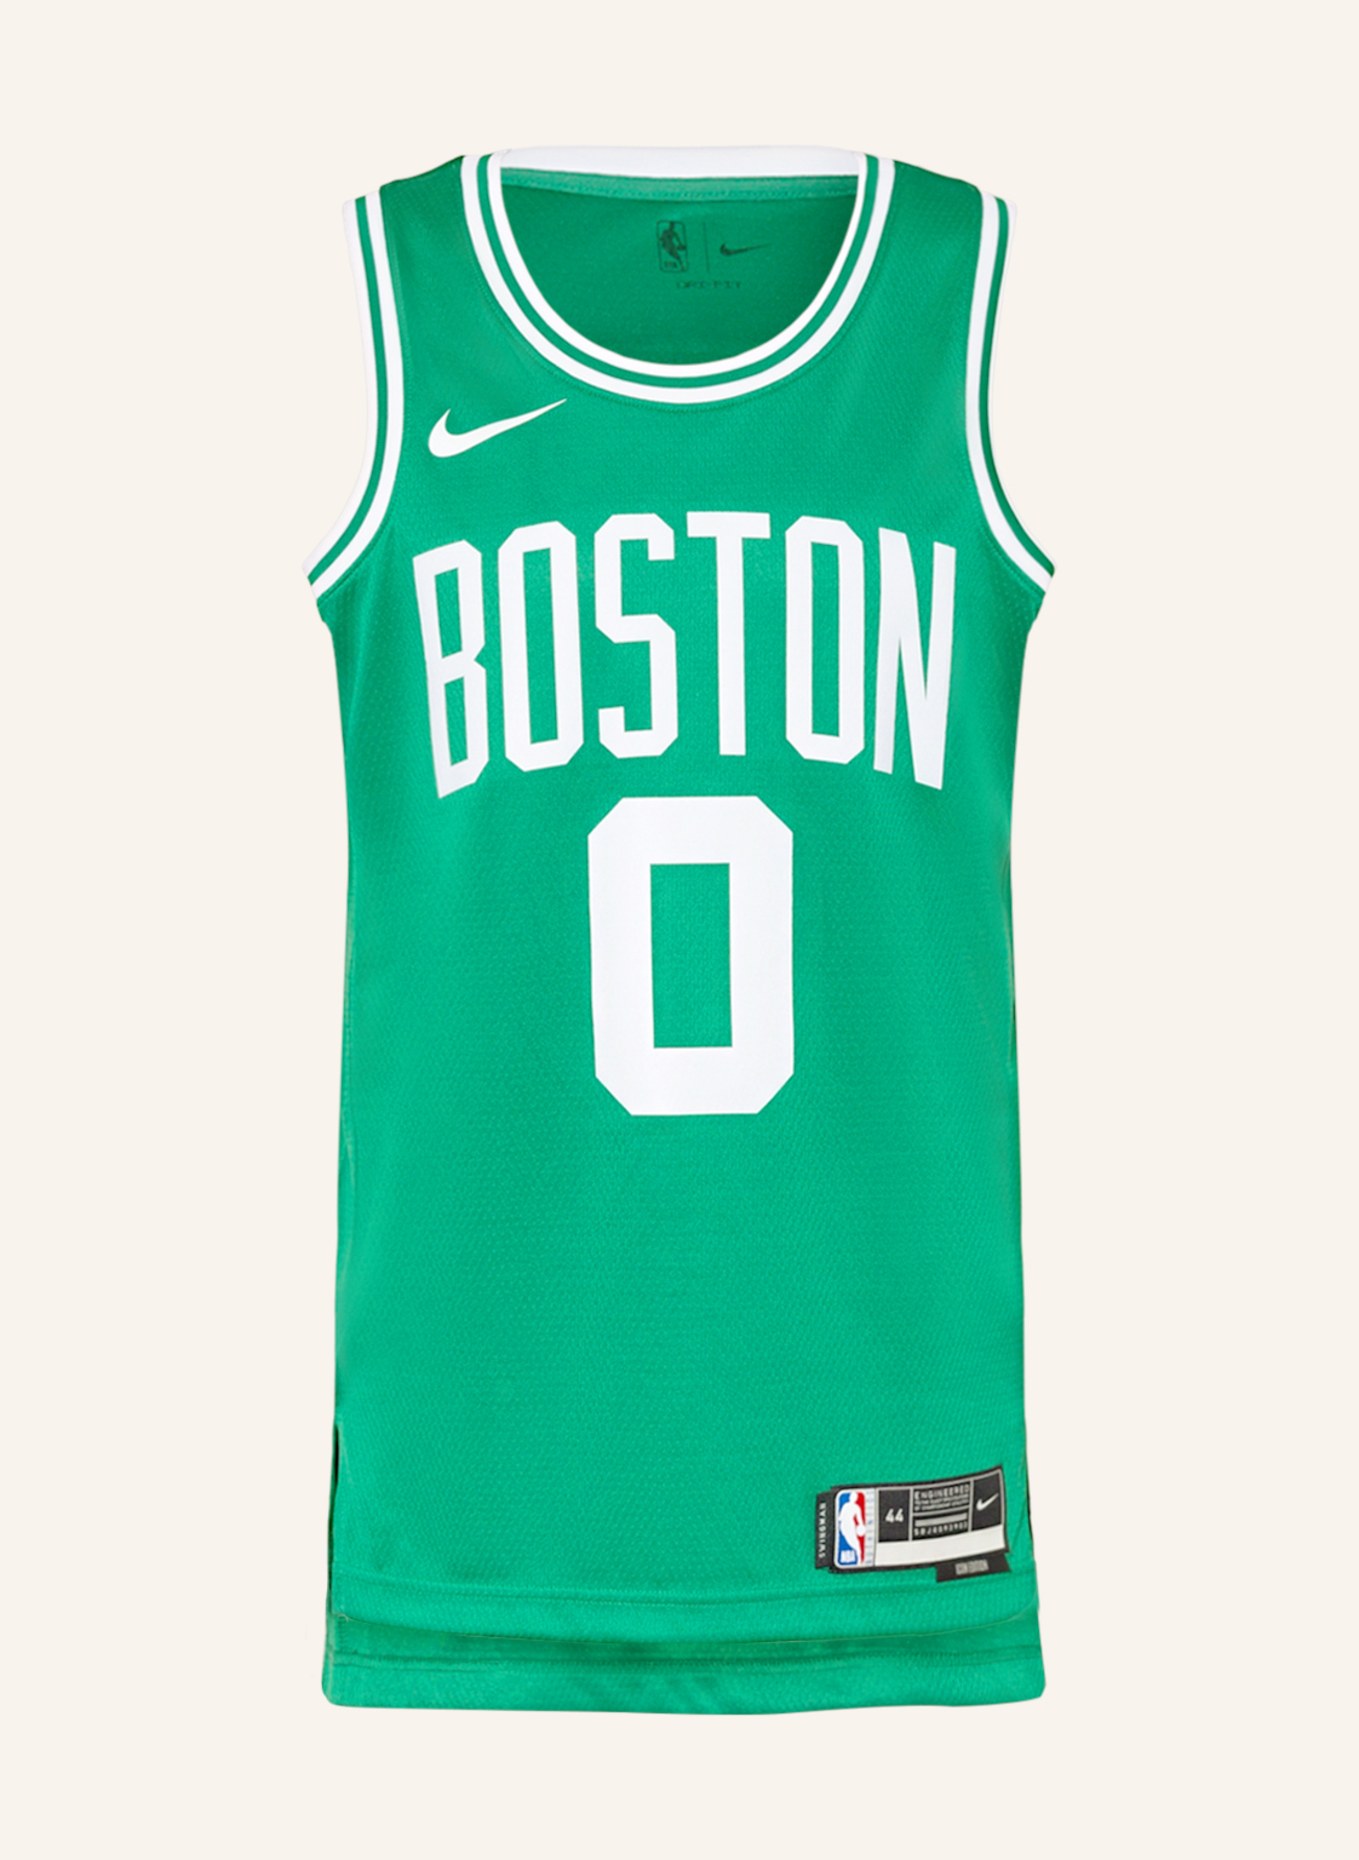 Boston Celtics Standard Issue Women's Nike Dri-FIT NBA Jersey.